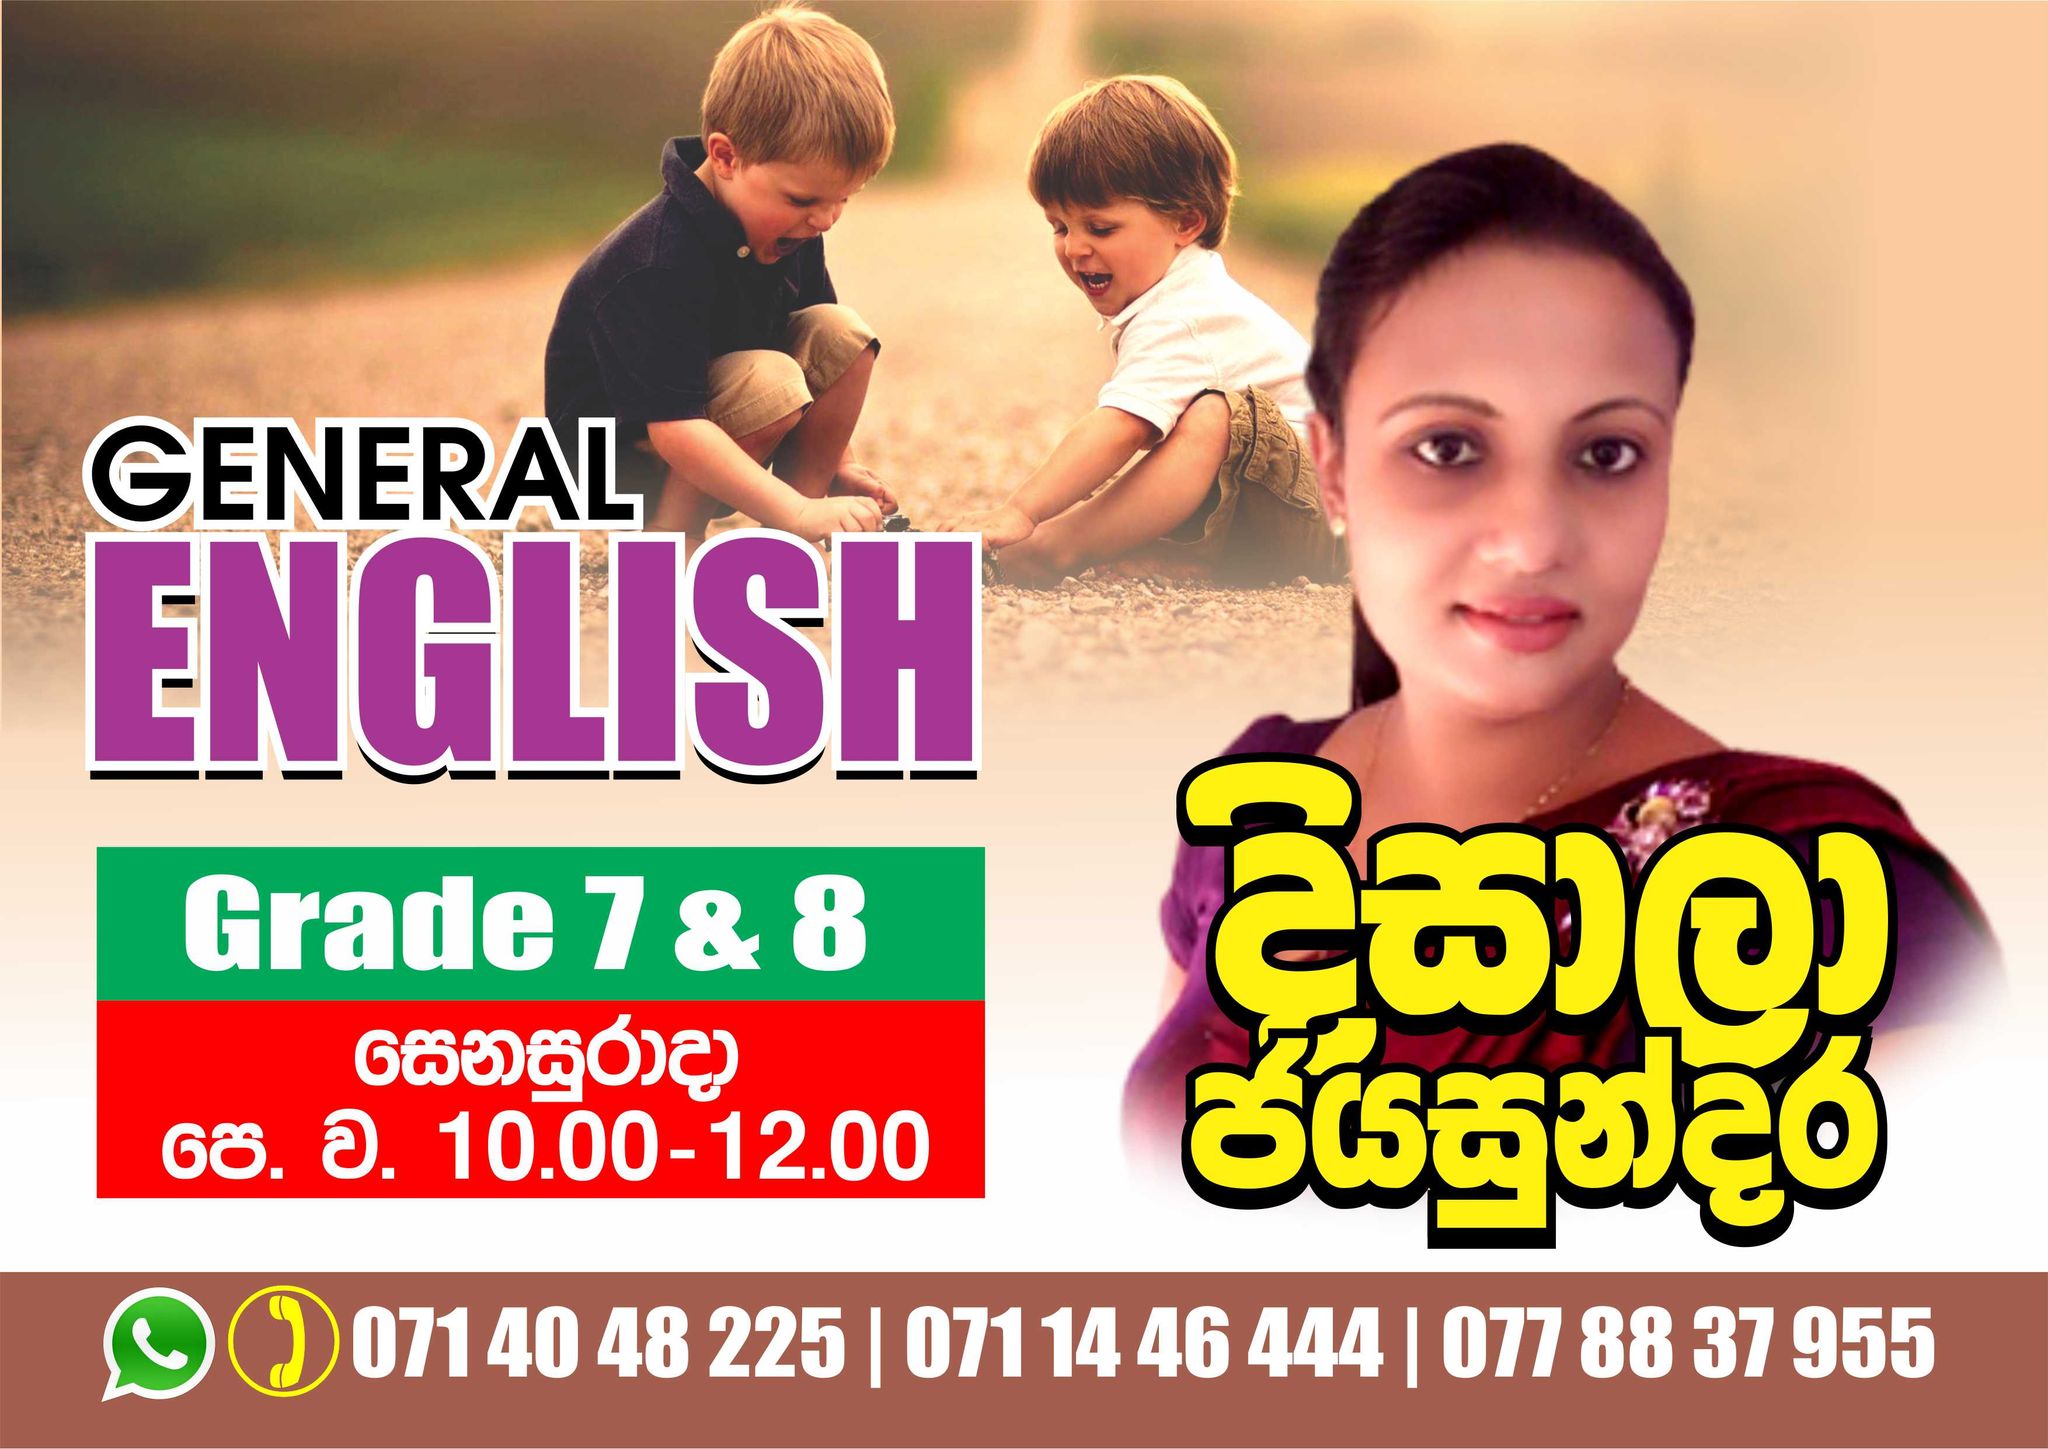 general-english-grade-7-8-july-esiphala-lk-sri-lanka-s-largest-online-learning-platform